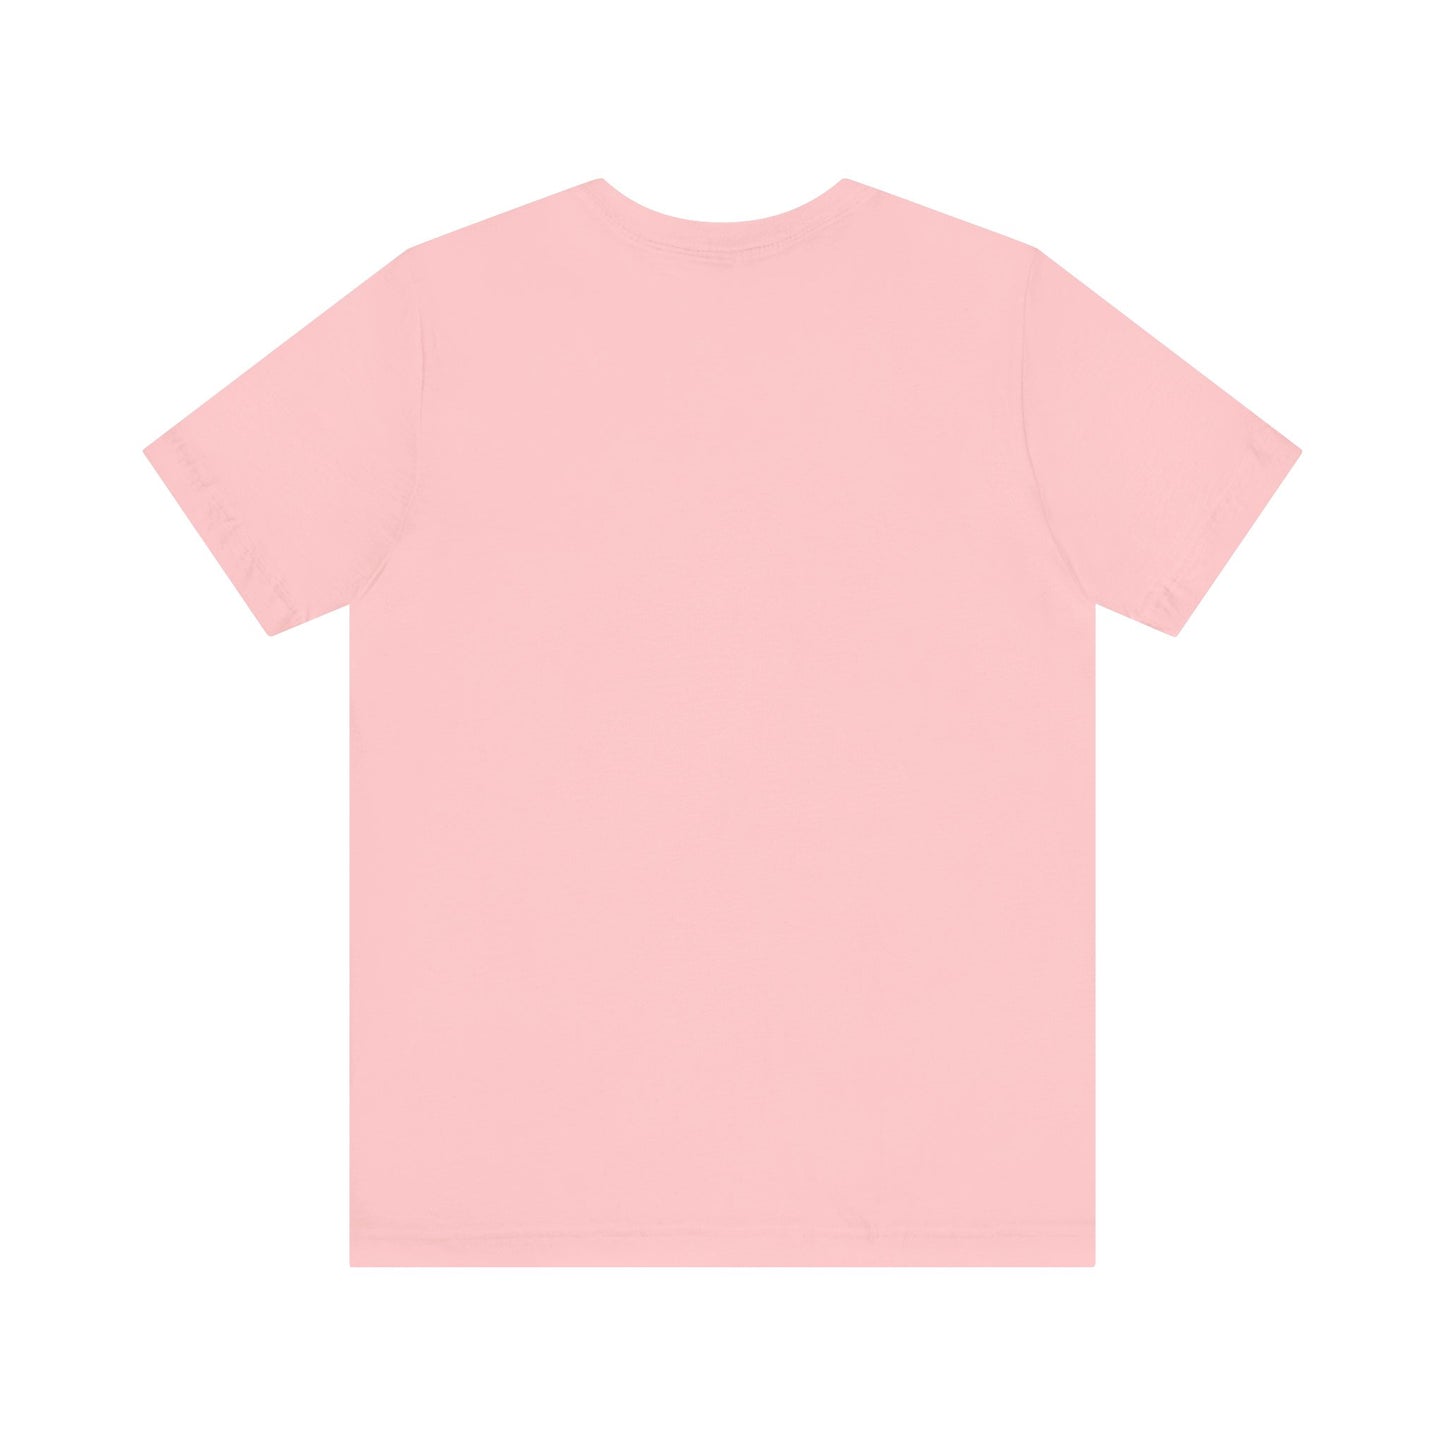 Chernivtsi T-shirt Unisex Jersey Short Sleeve Tee